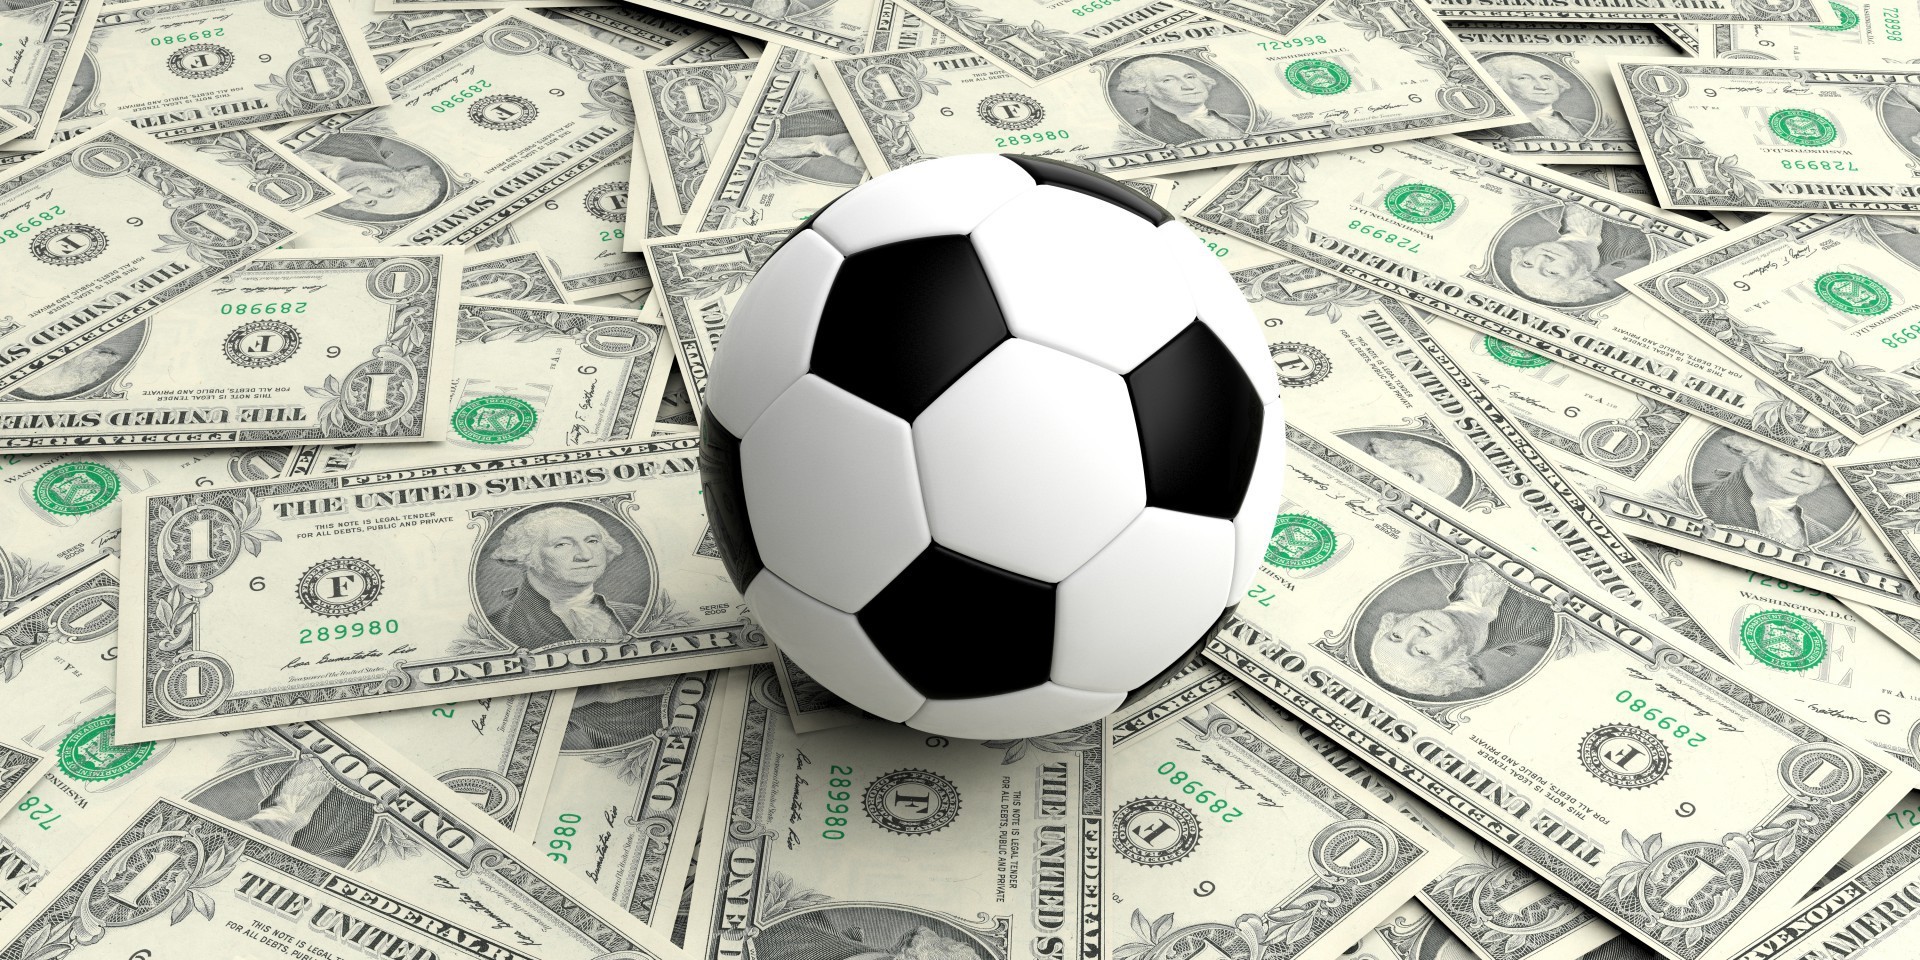 Futebol e dinheiro (dollar) (Foto: GETTYIMAGES/Rawf8)